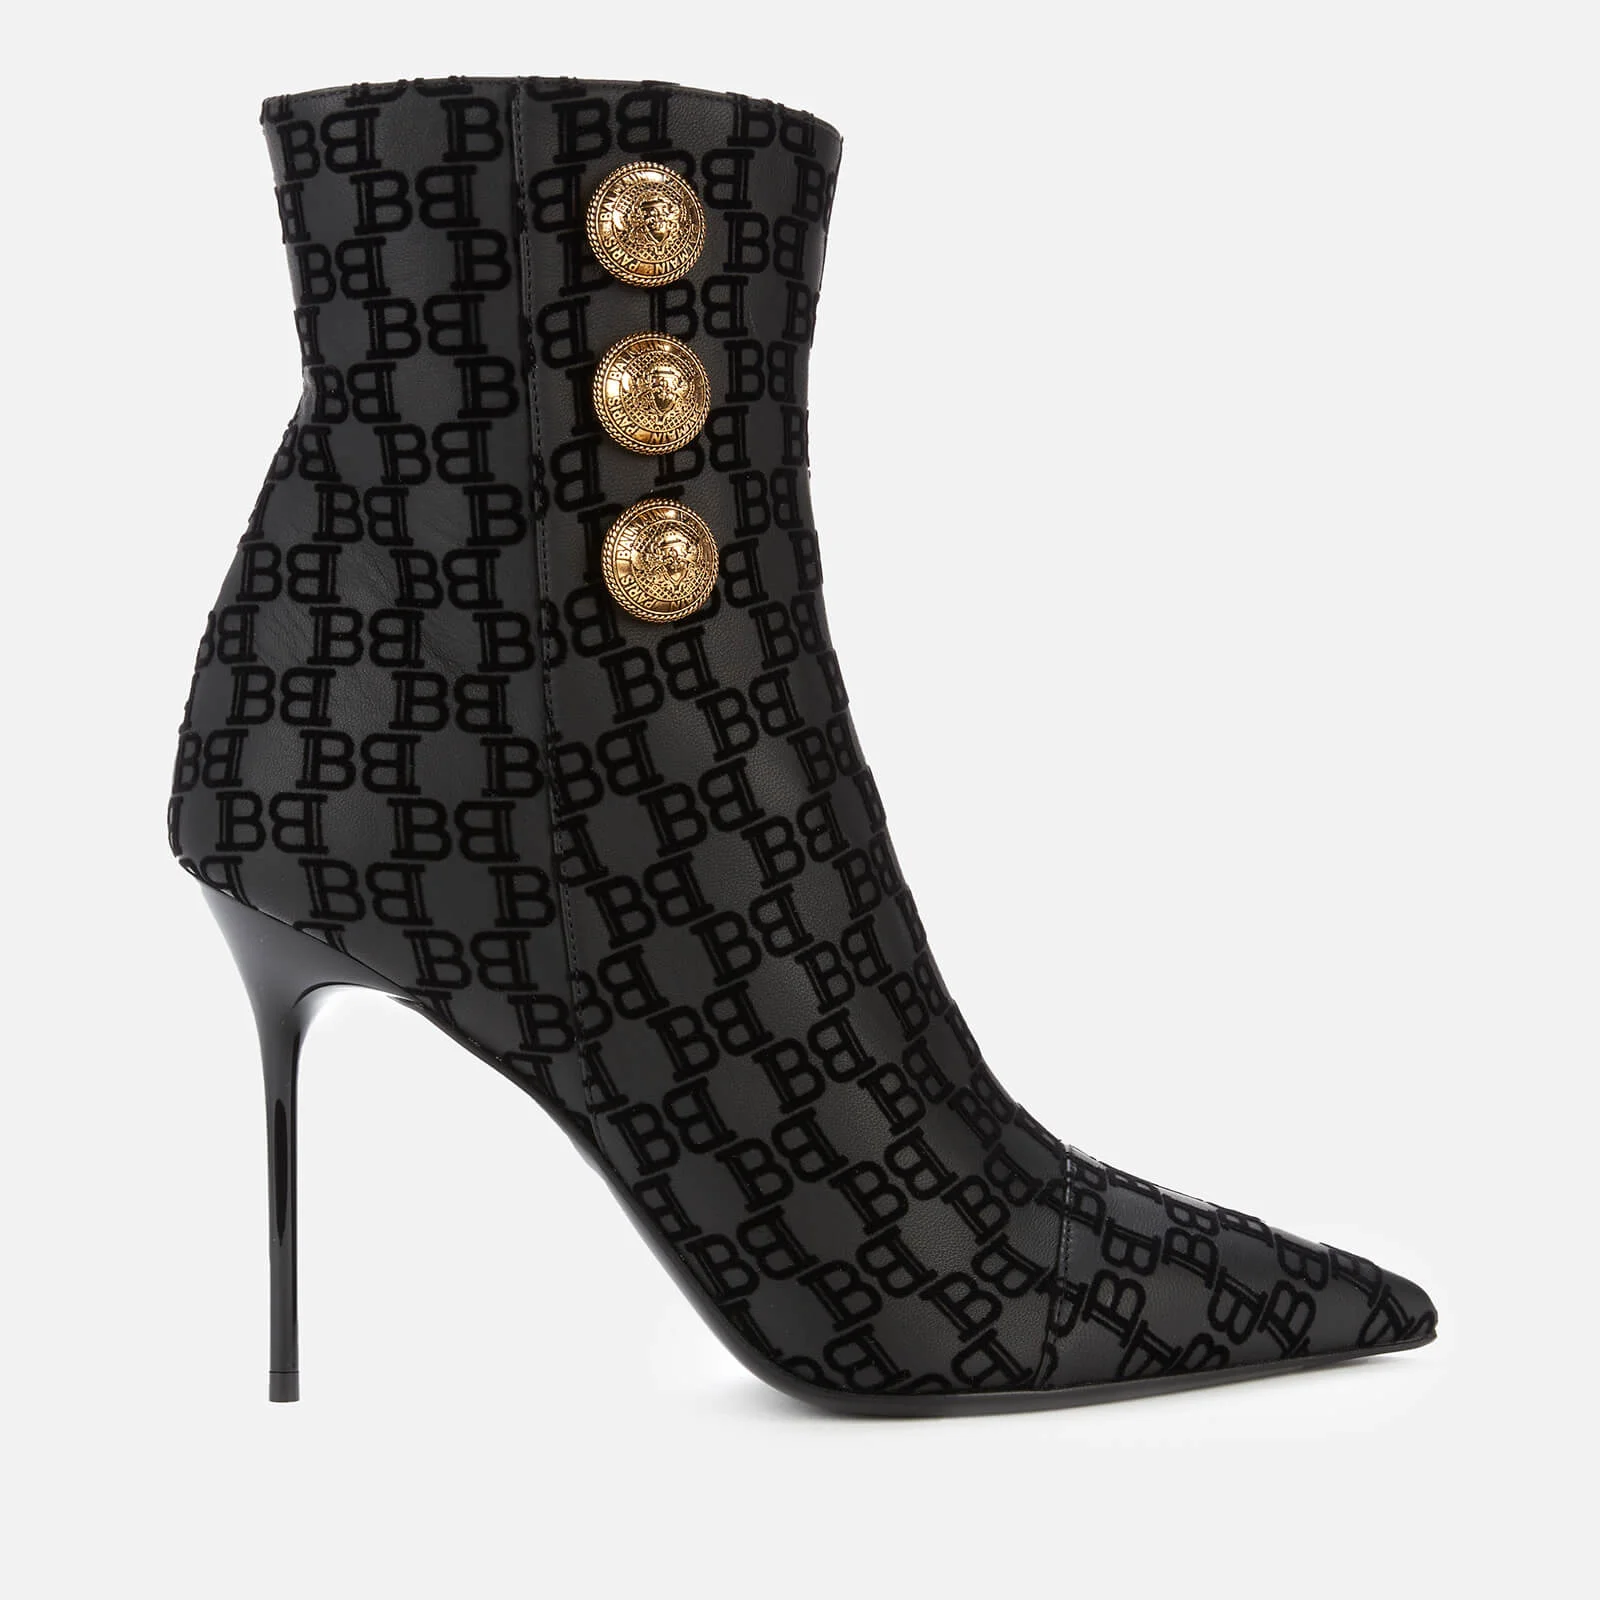 Balmain Women's Heeled Shoe Boots - Black Image 1